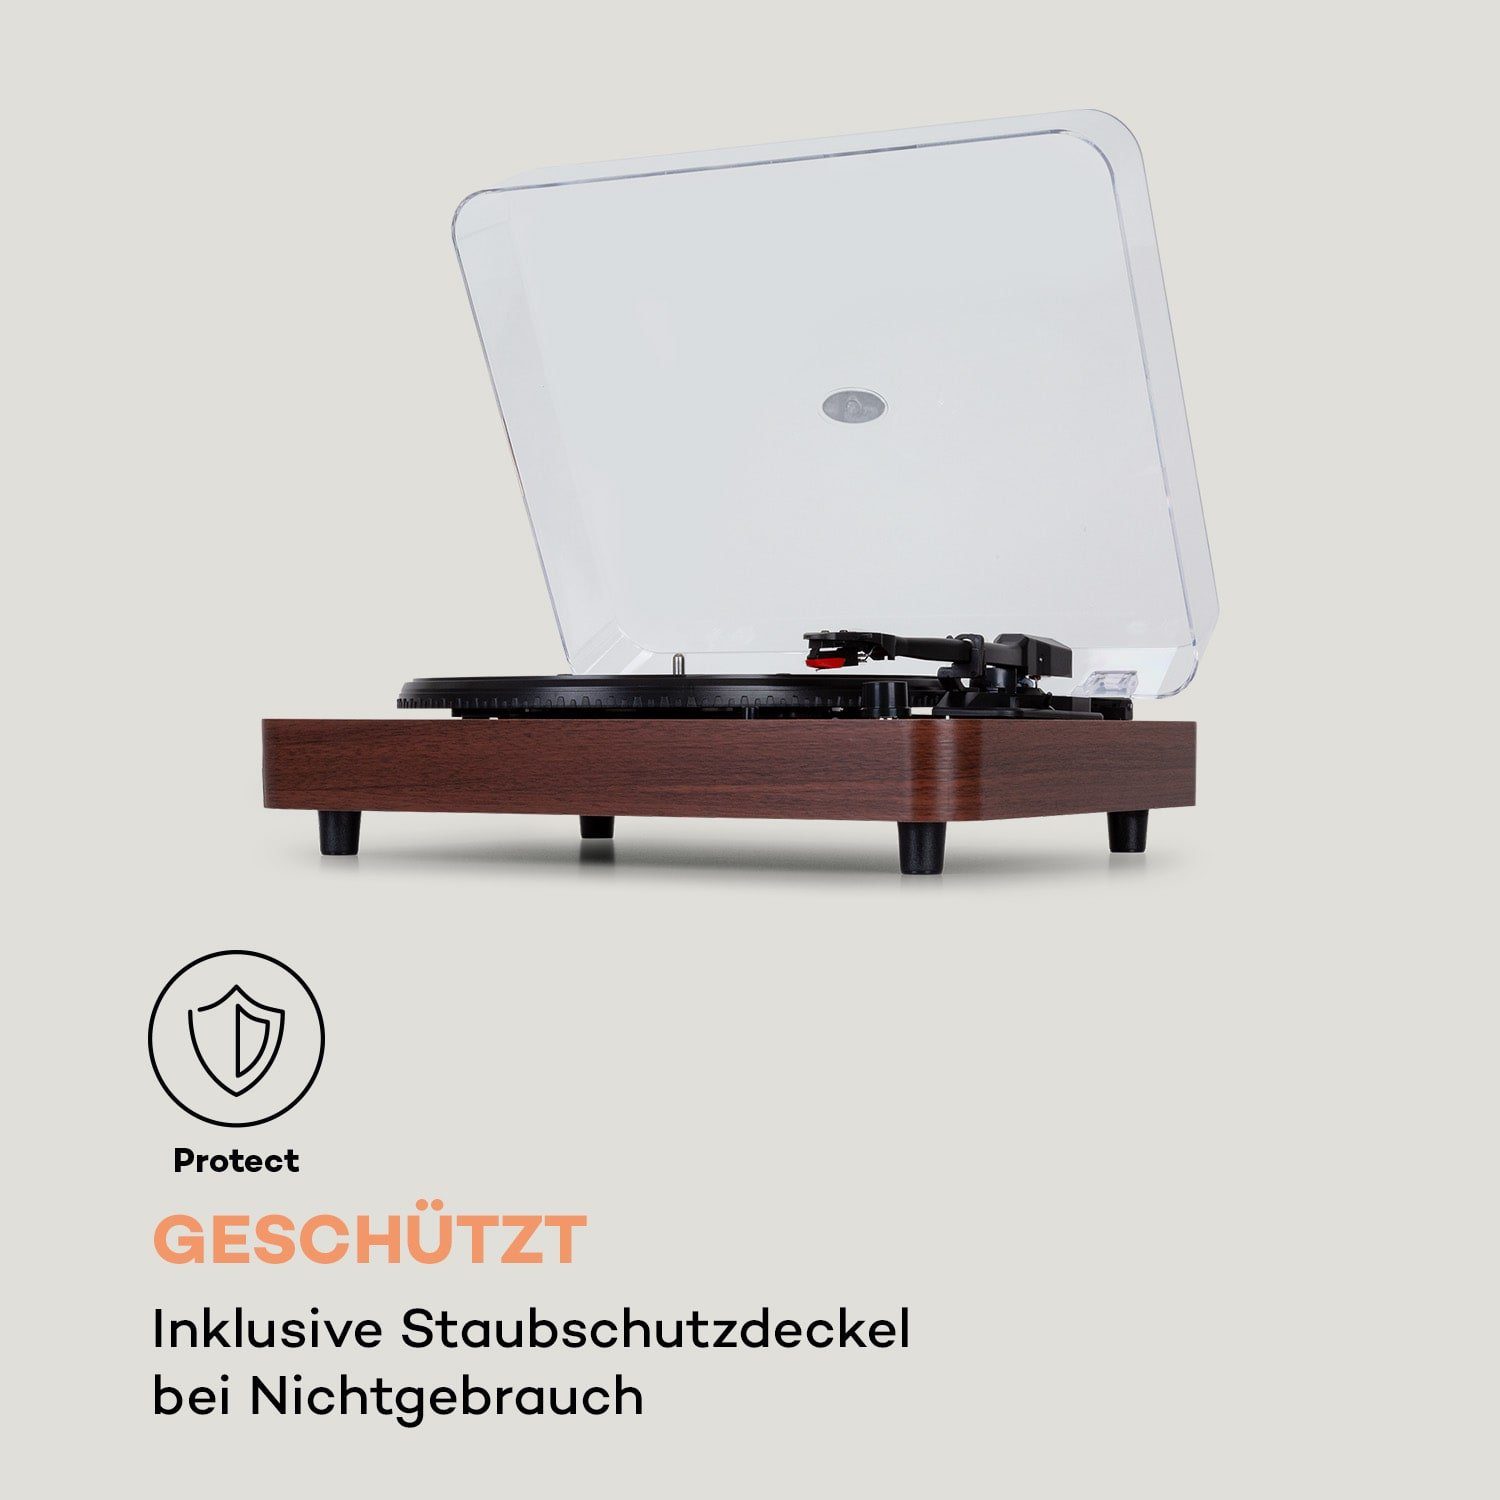 Auna TT-Classic (Riemenantrieb, mit Schallplattenspieler Light Vinyl Plattenspieler Walnuss Bluetooth, Lautsprecher Plattenspieler)